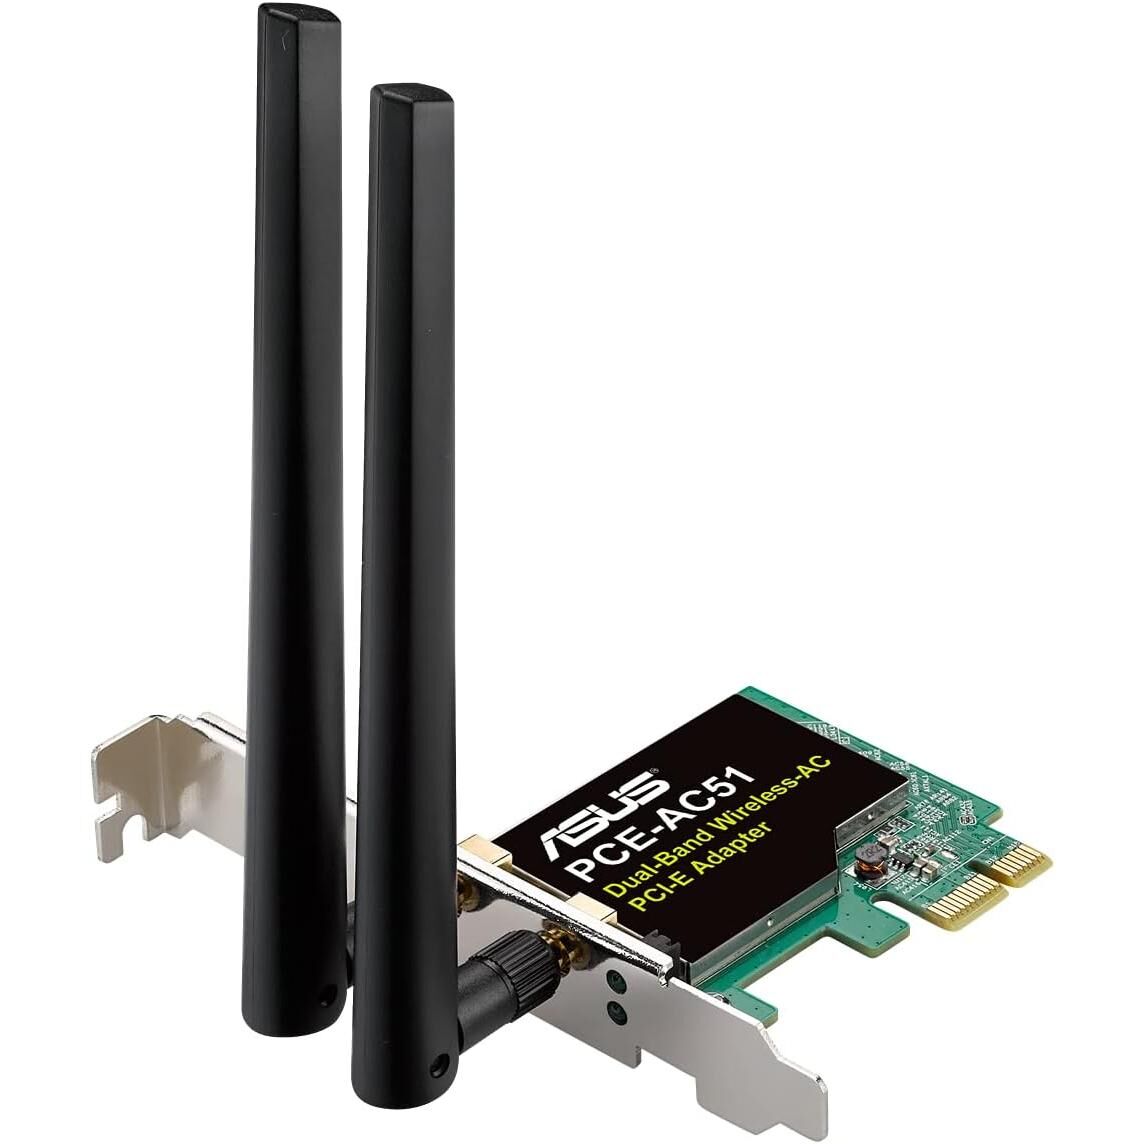 Asus Pce-Ac51 -Tarjeta De Red Wi-Fi Pci-E Ac750 (Dual-Band, Wep/wpa/wpa2, Antenas Removibles), Multicolour